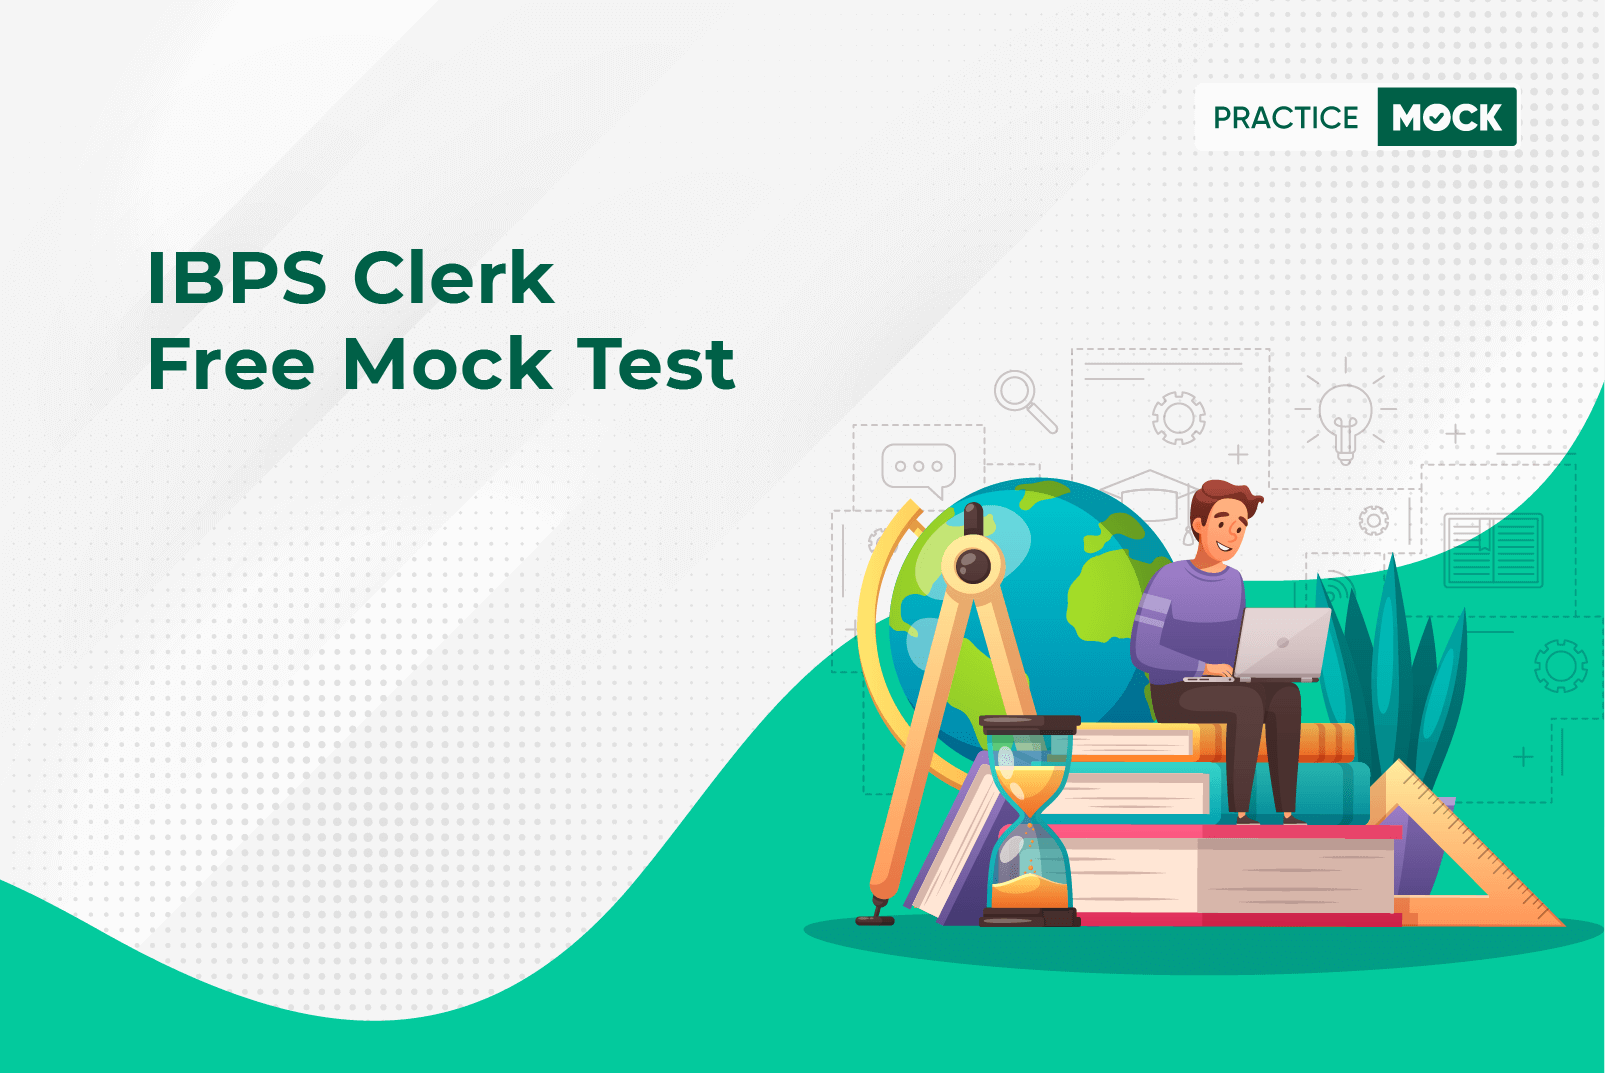 IBPS Clerk Free Mock Test